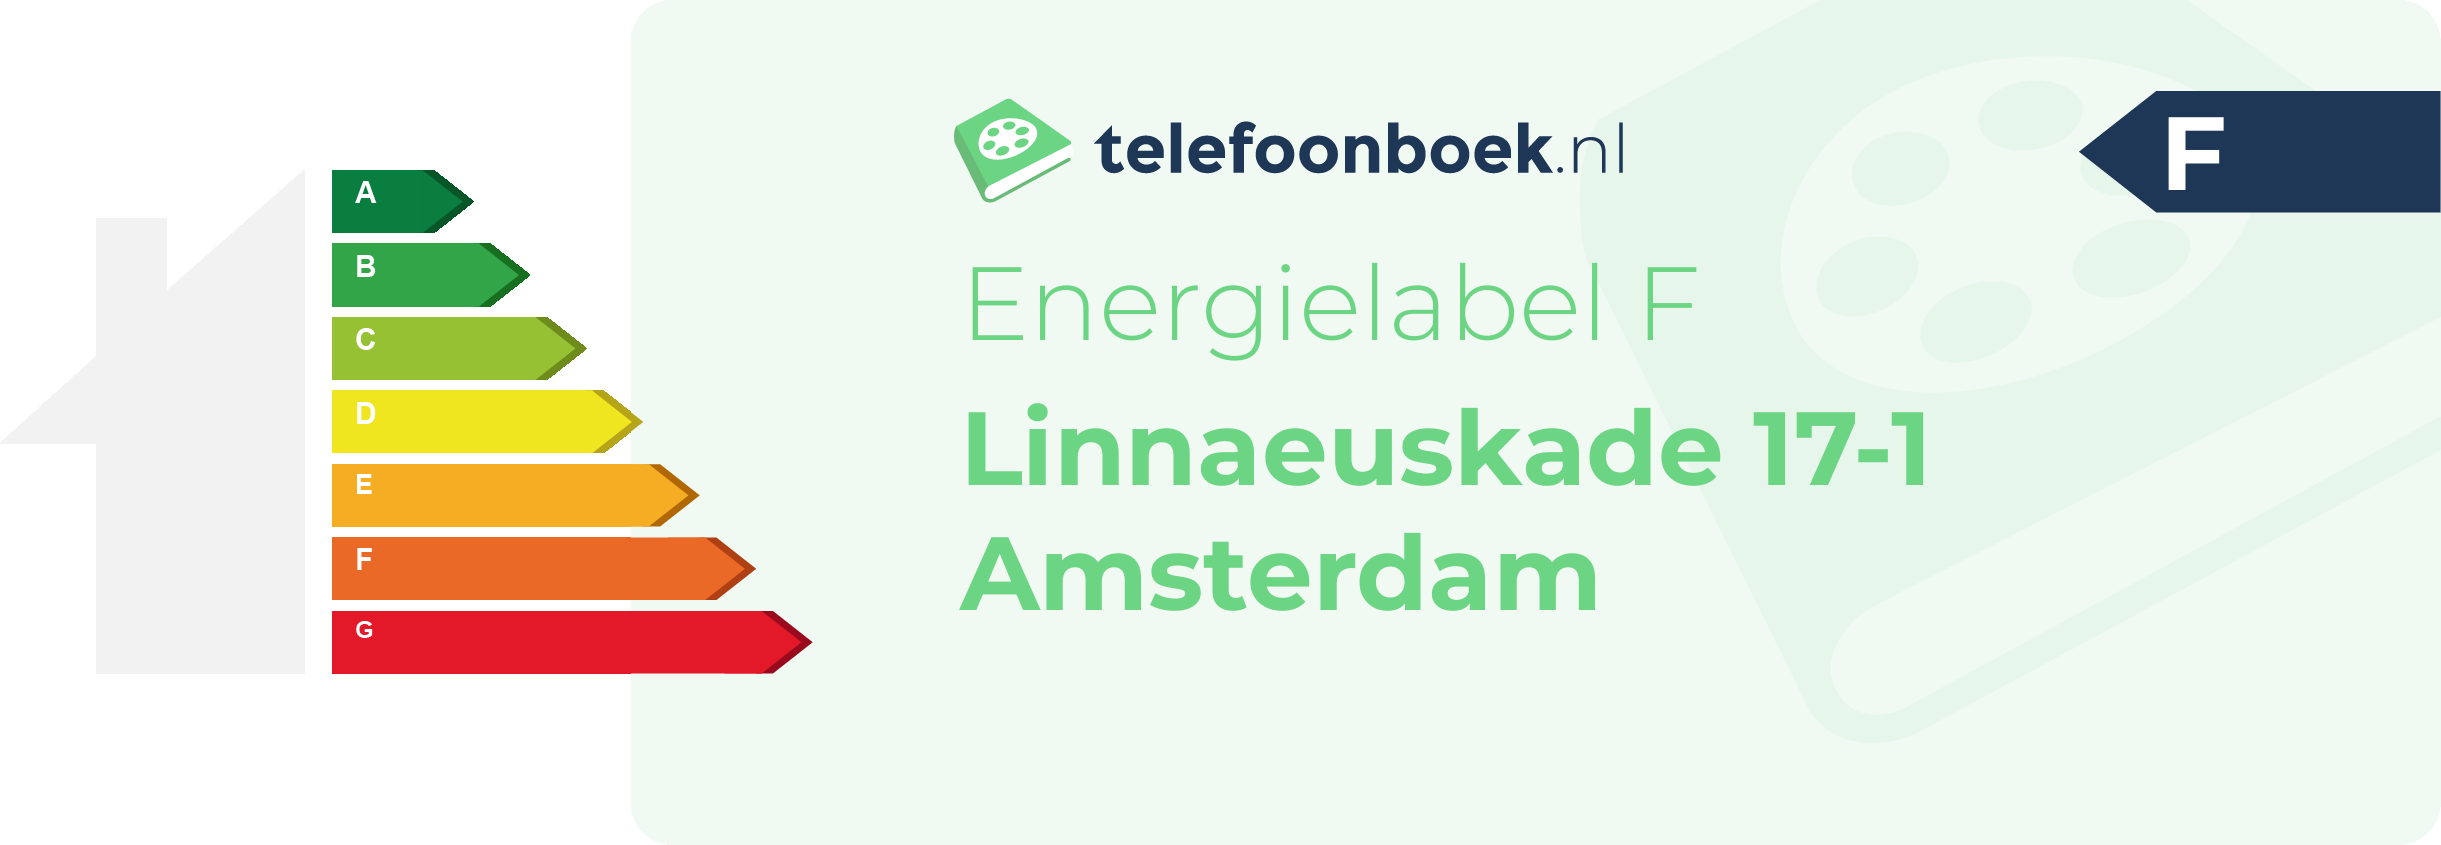 Energielabel Linnaeuskade 17-1 Amsterdam